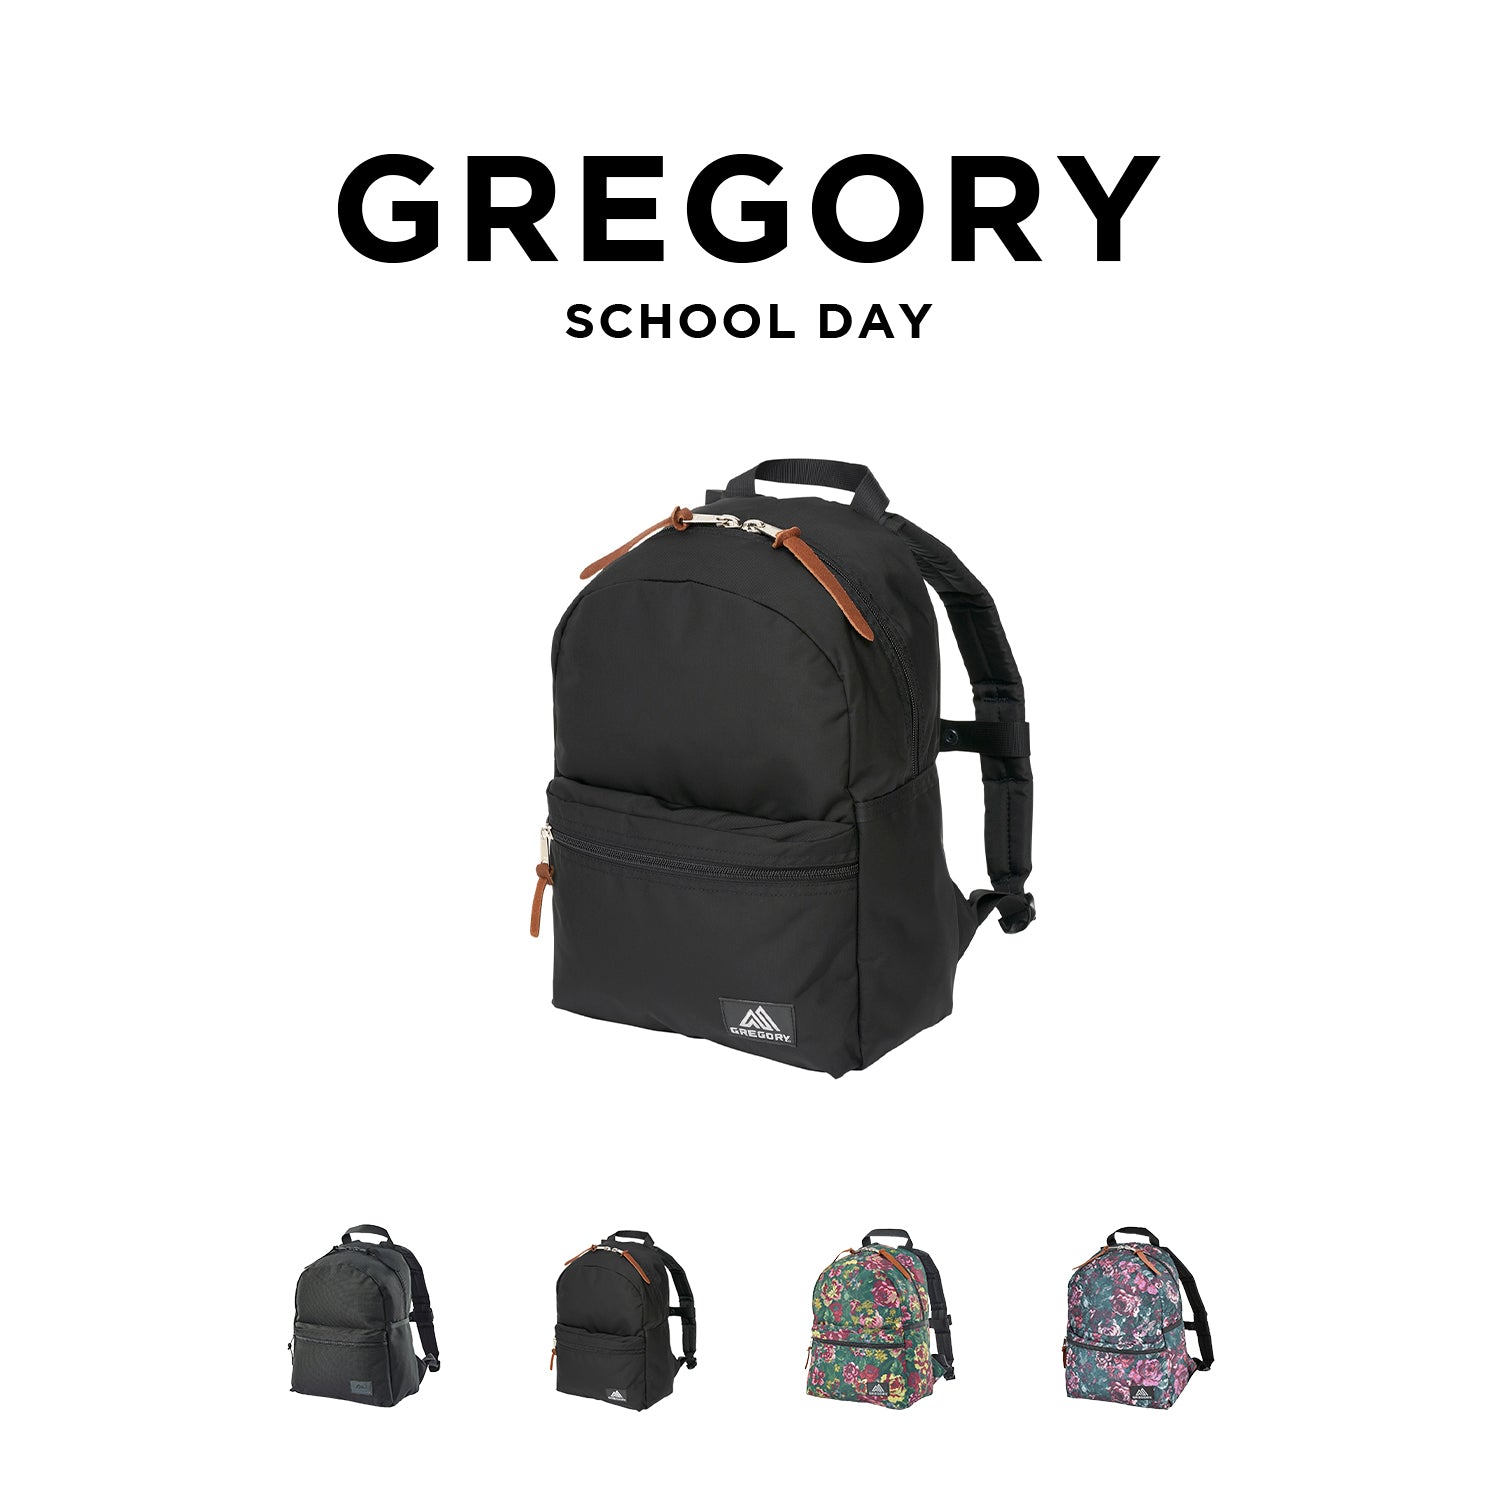 Gregory School Day